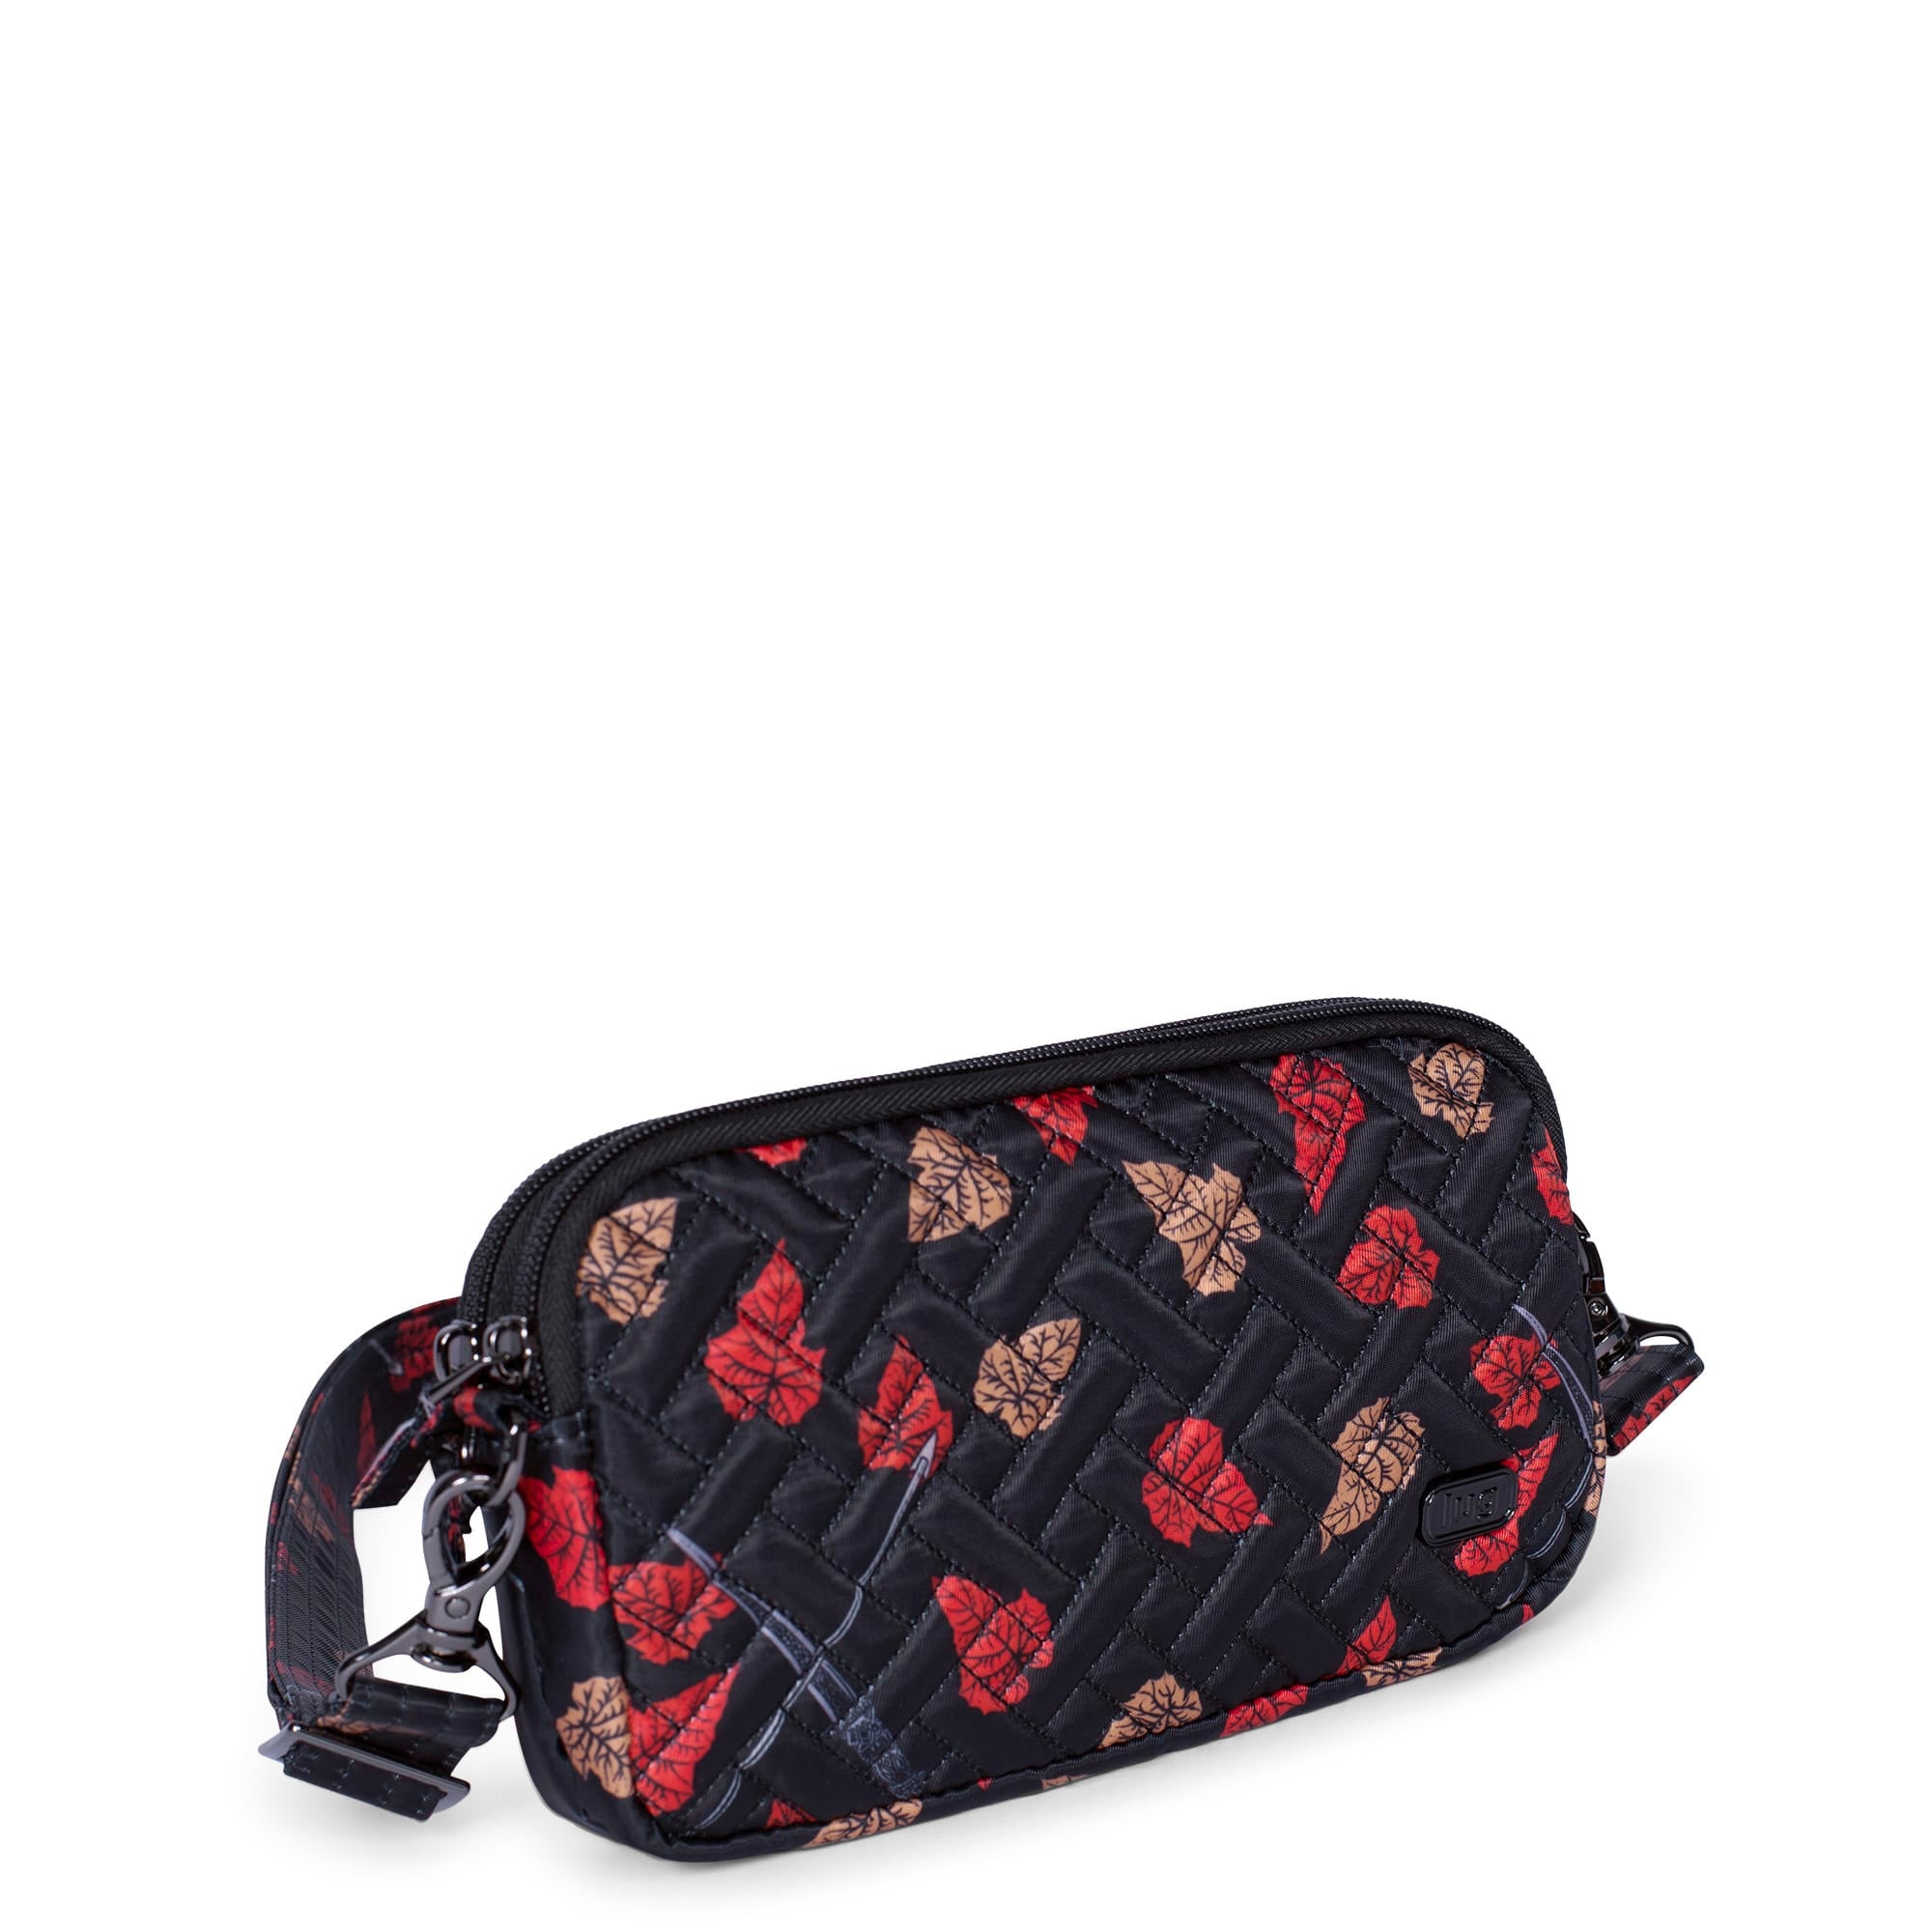 Download Image Pink Louis Vuitton Handbag with Teal Leather Trim Wallpaper